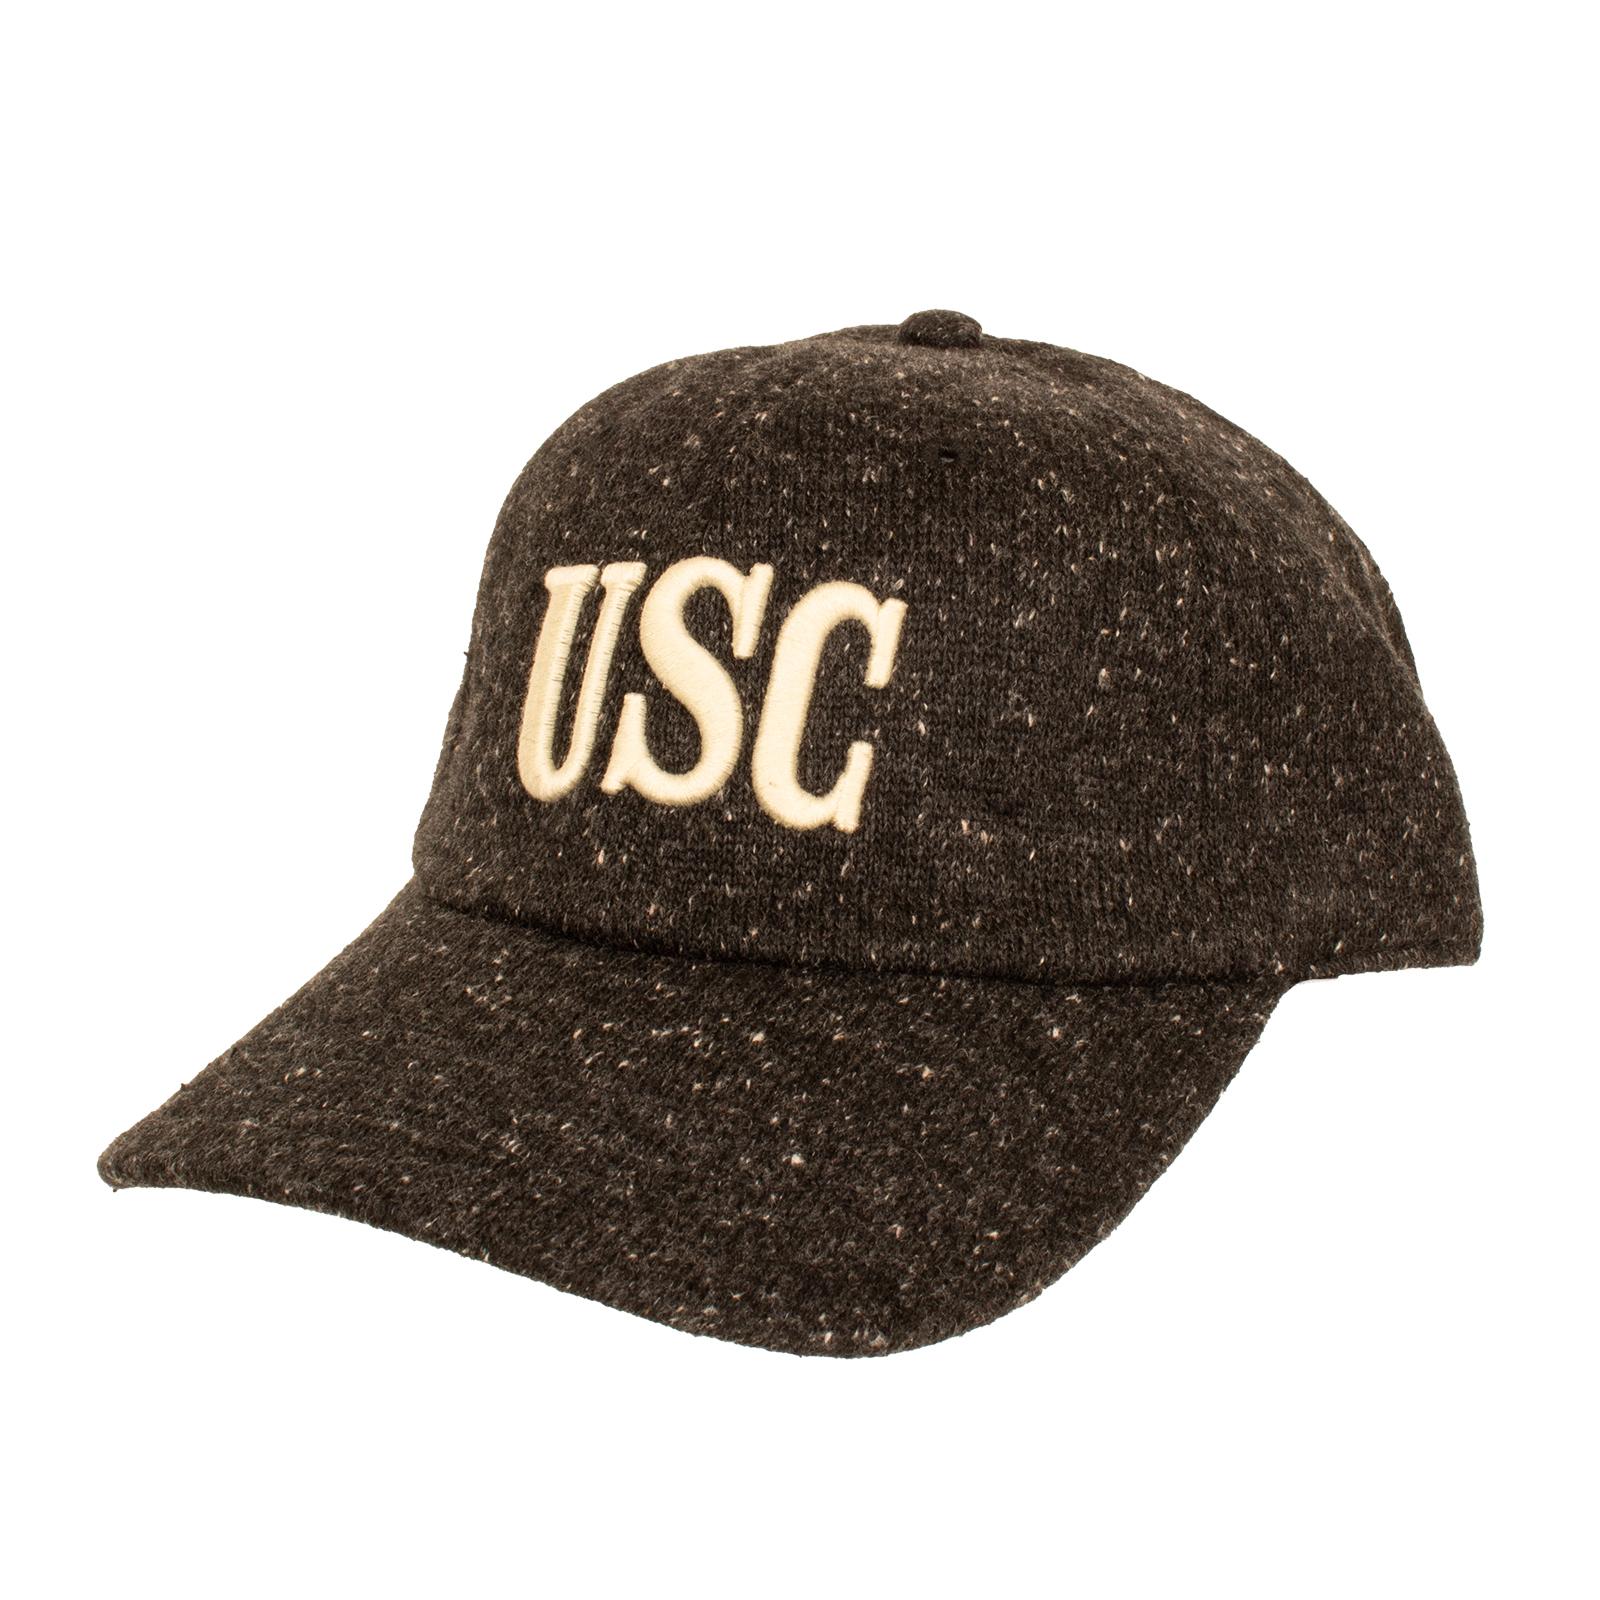 USC Unisex Wool Canopy Adjustable Hat Black image01